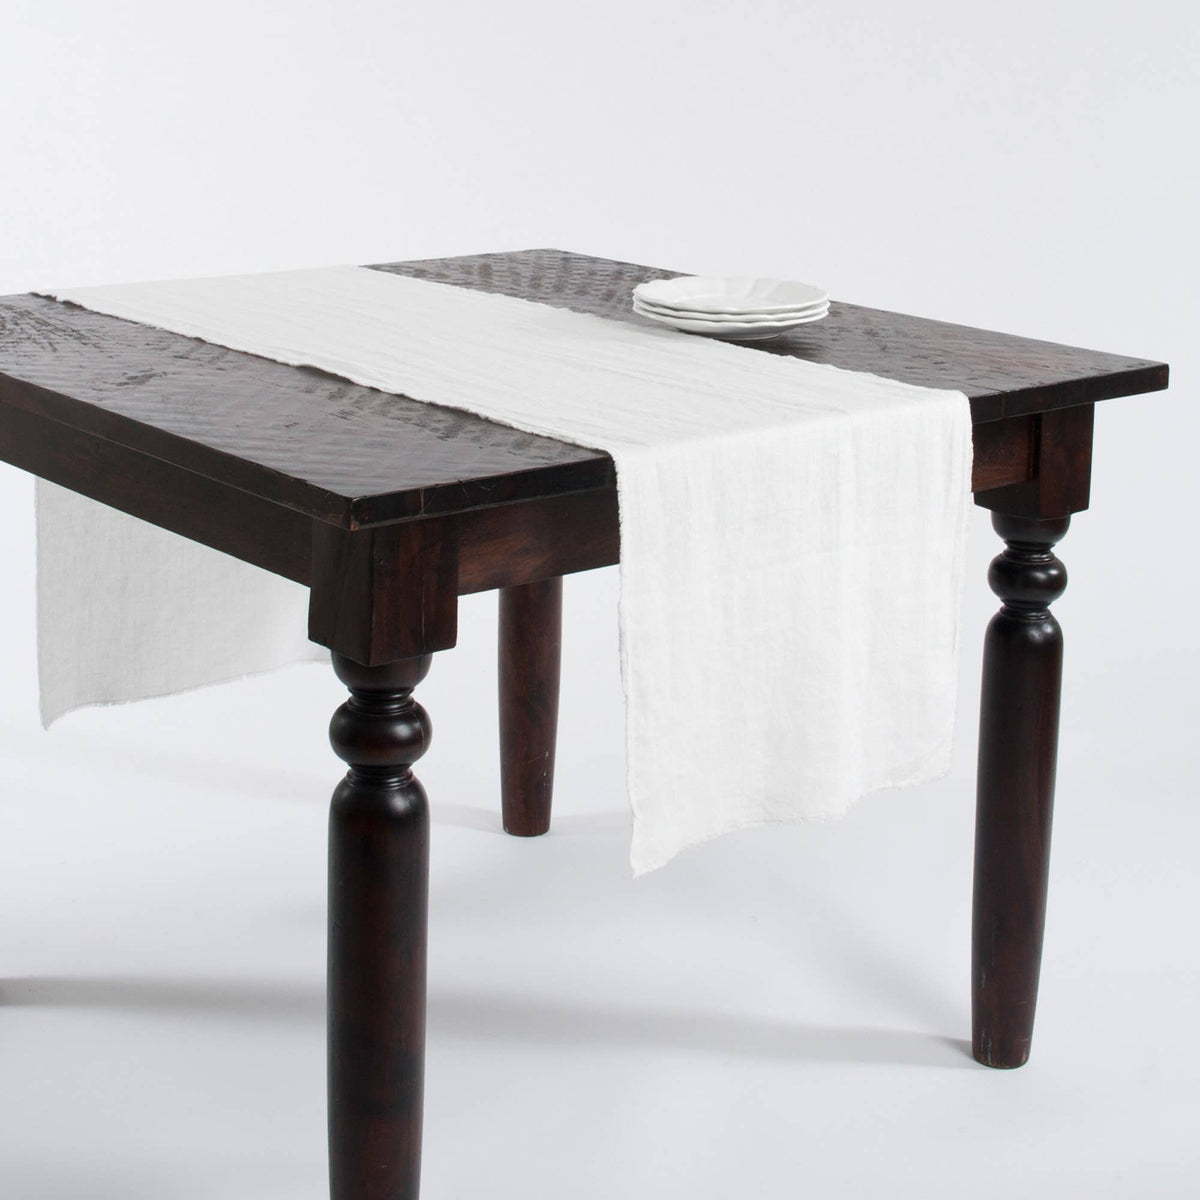 Table Runner - Fringed Design Stone Washed: 16"x72" / Ivory